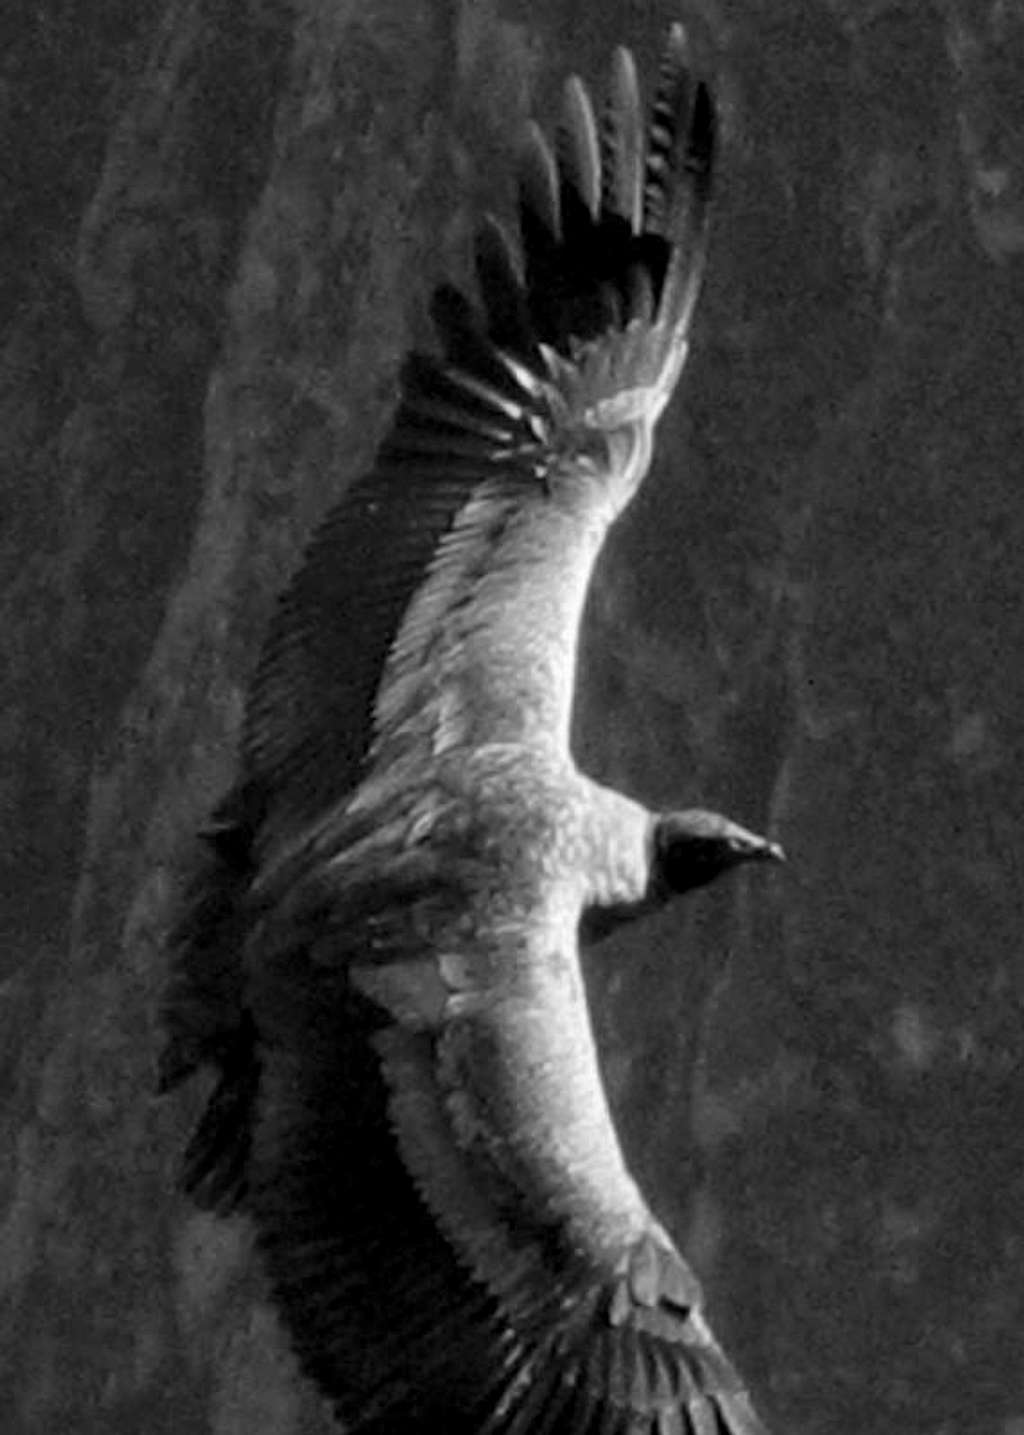 Flying Condor